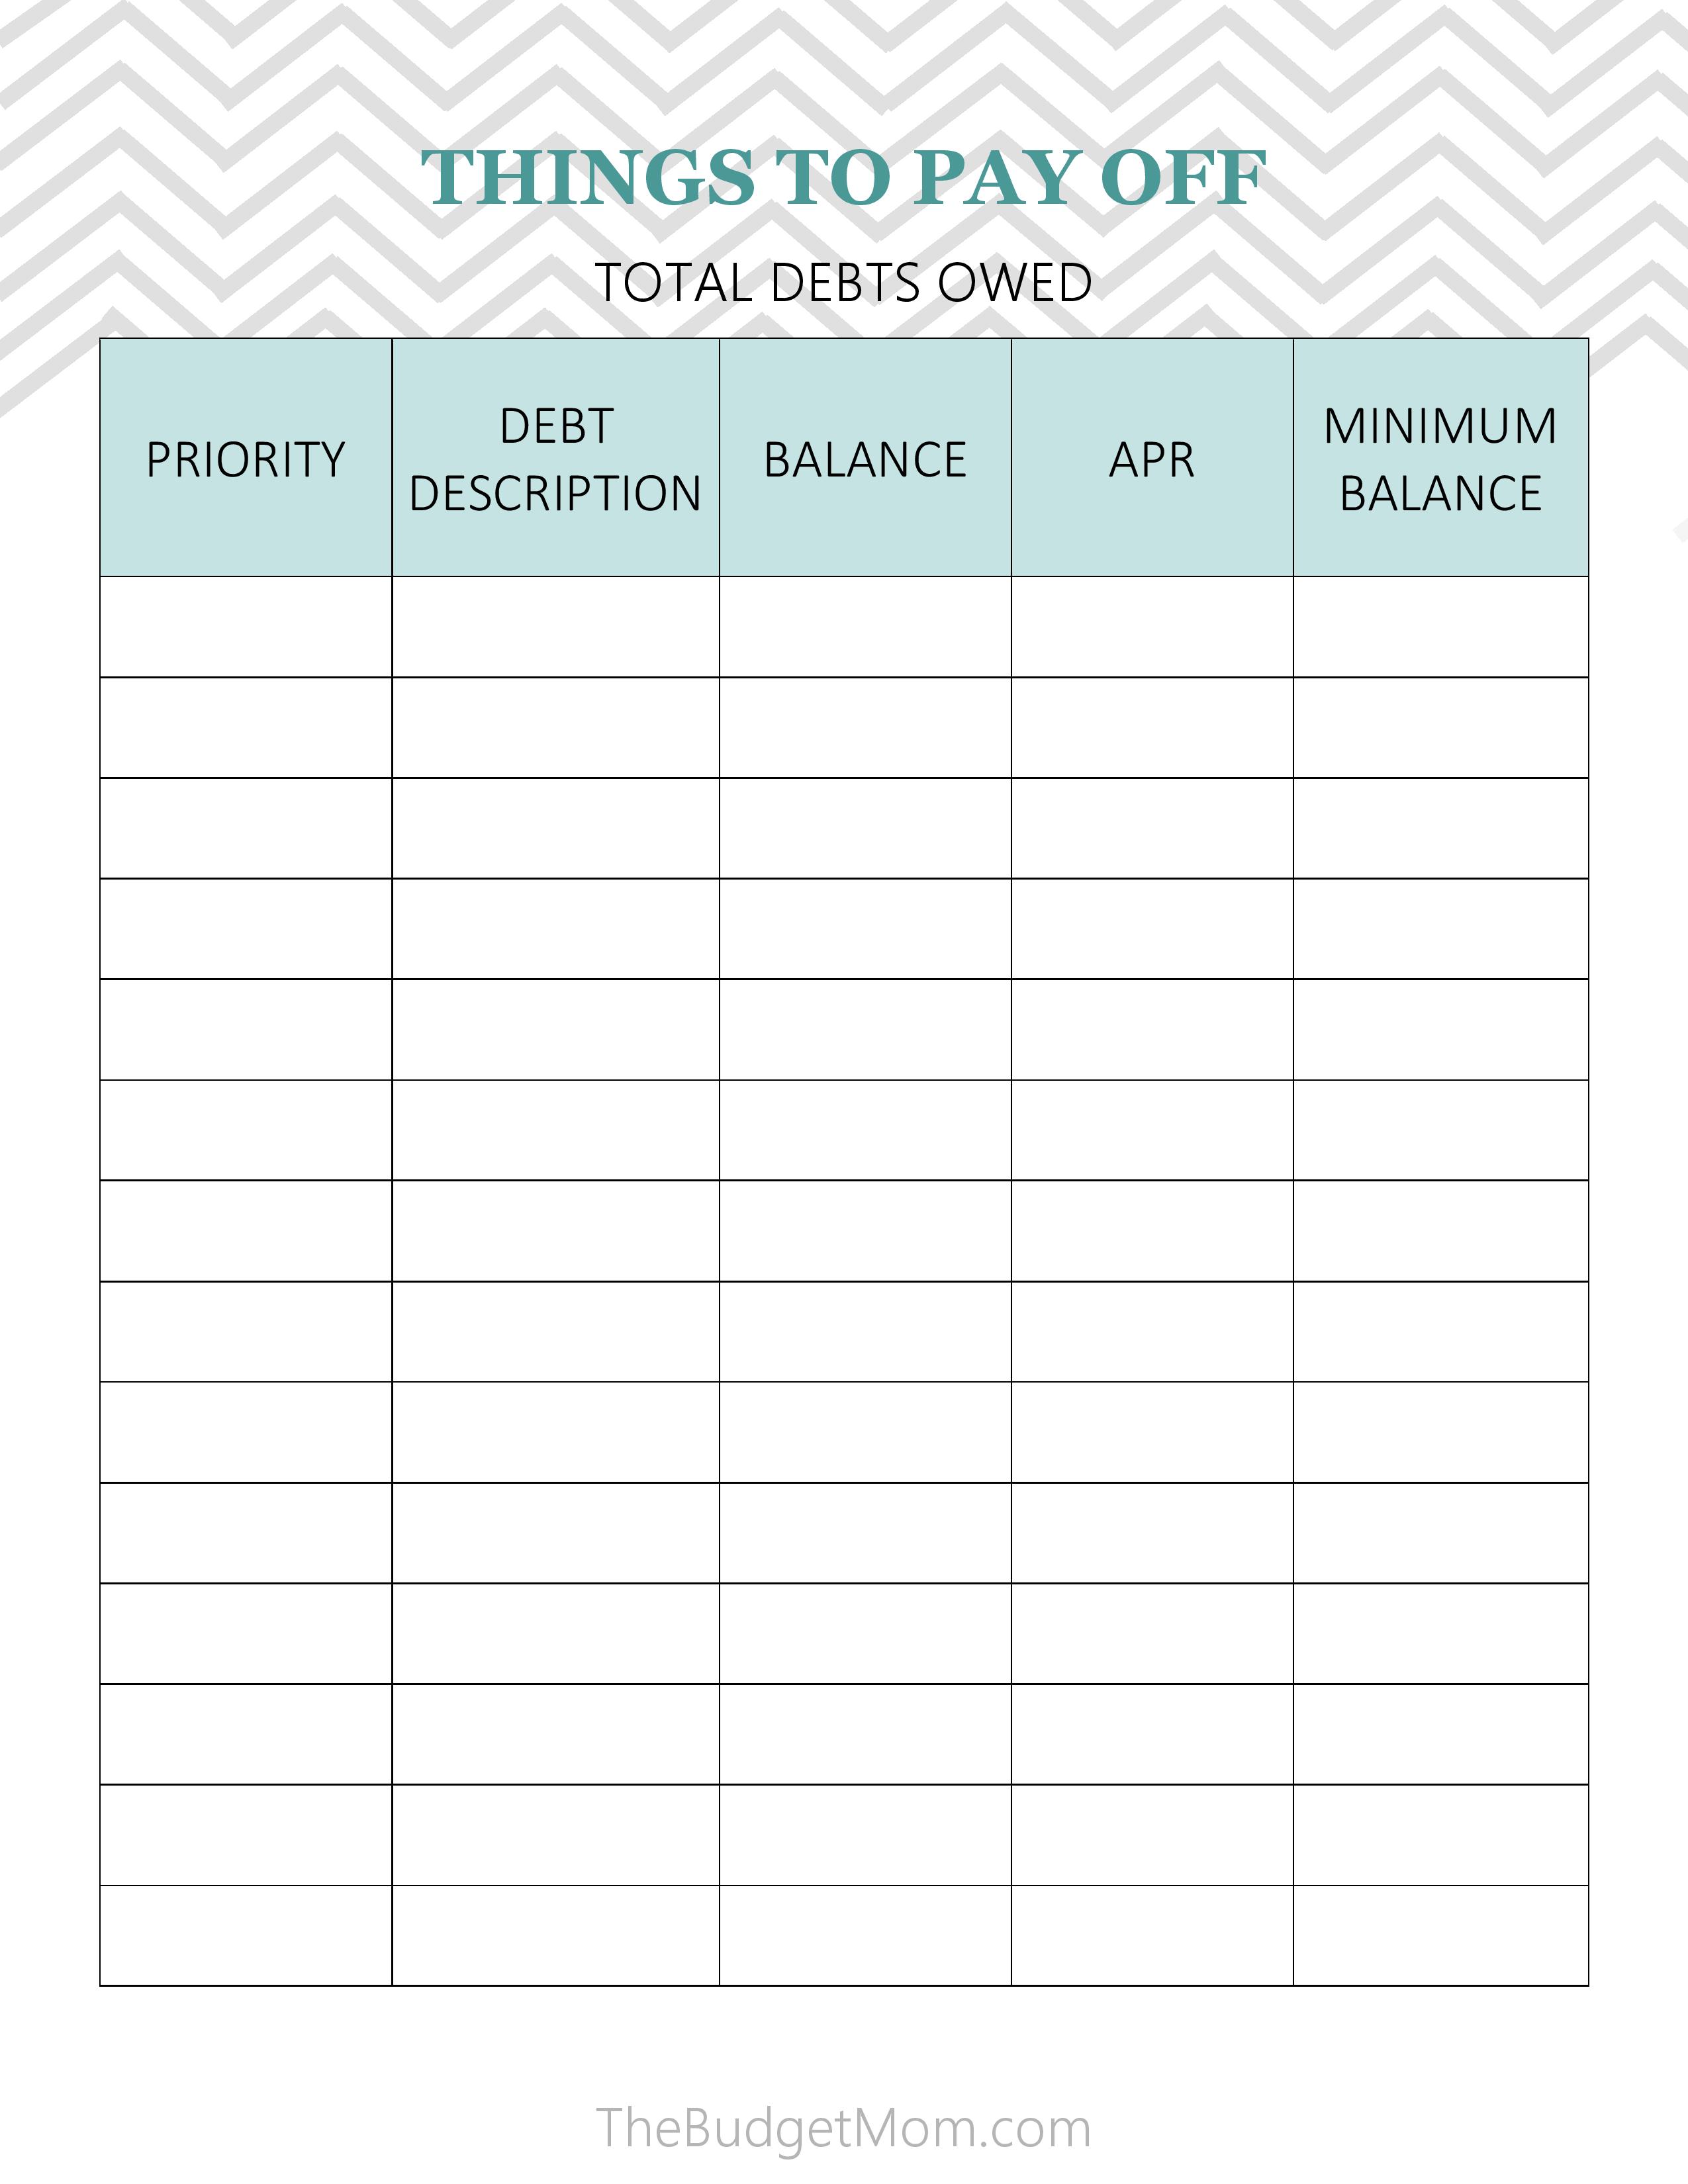 total-debt-owed-worksheet-page-001-the-budget-mom